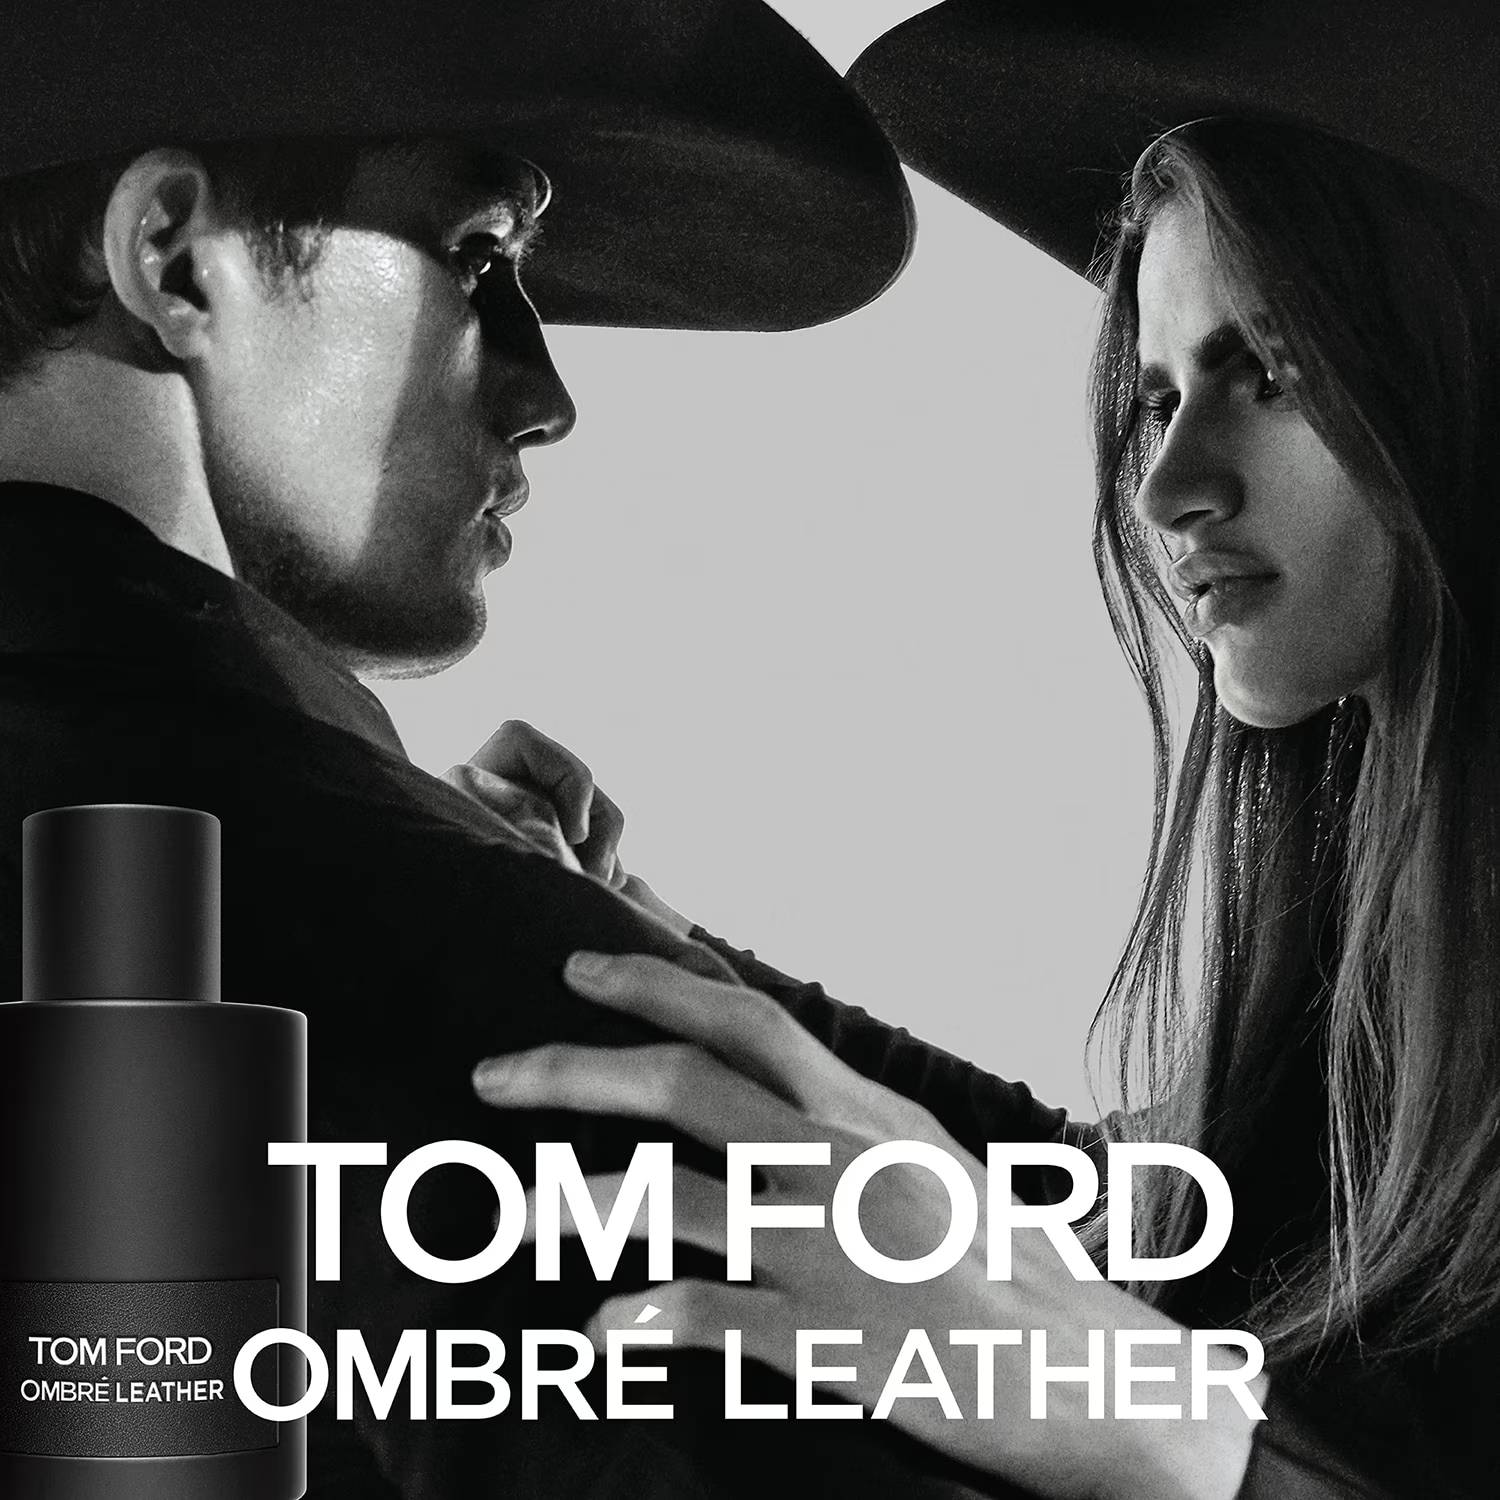 عطر تام فورد مدل Ombre Leather